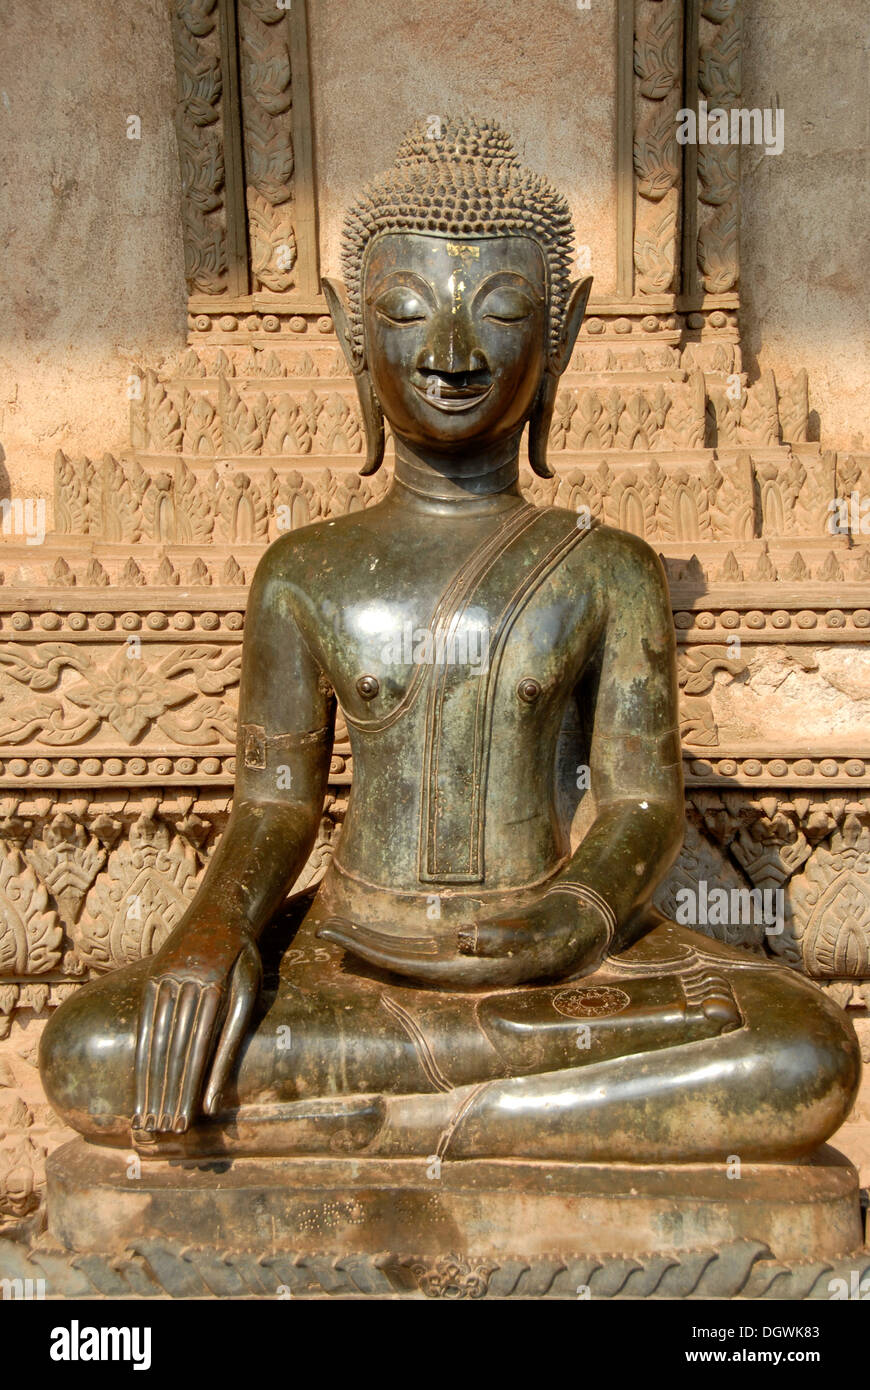 Il Buddismo Theravada, antica statua del Buddha in bronzo nella meditazione, bhumisparsha mudra, Bhumisparshamudra Foto Stock